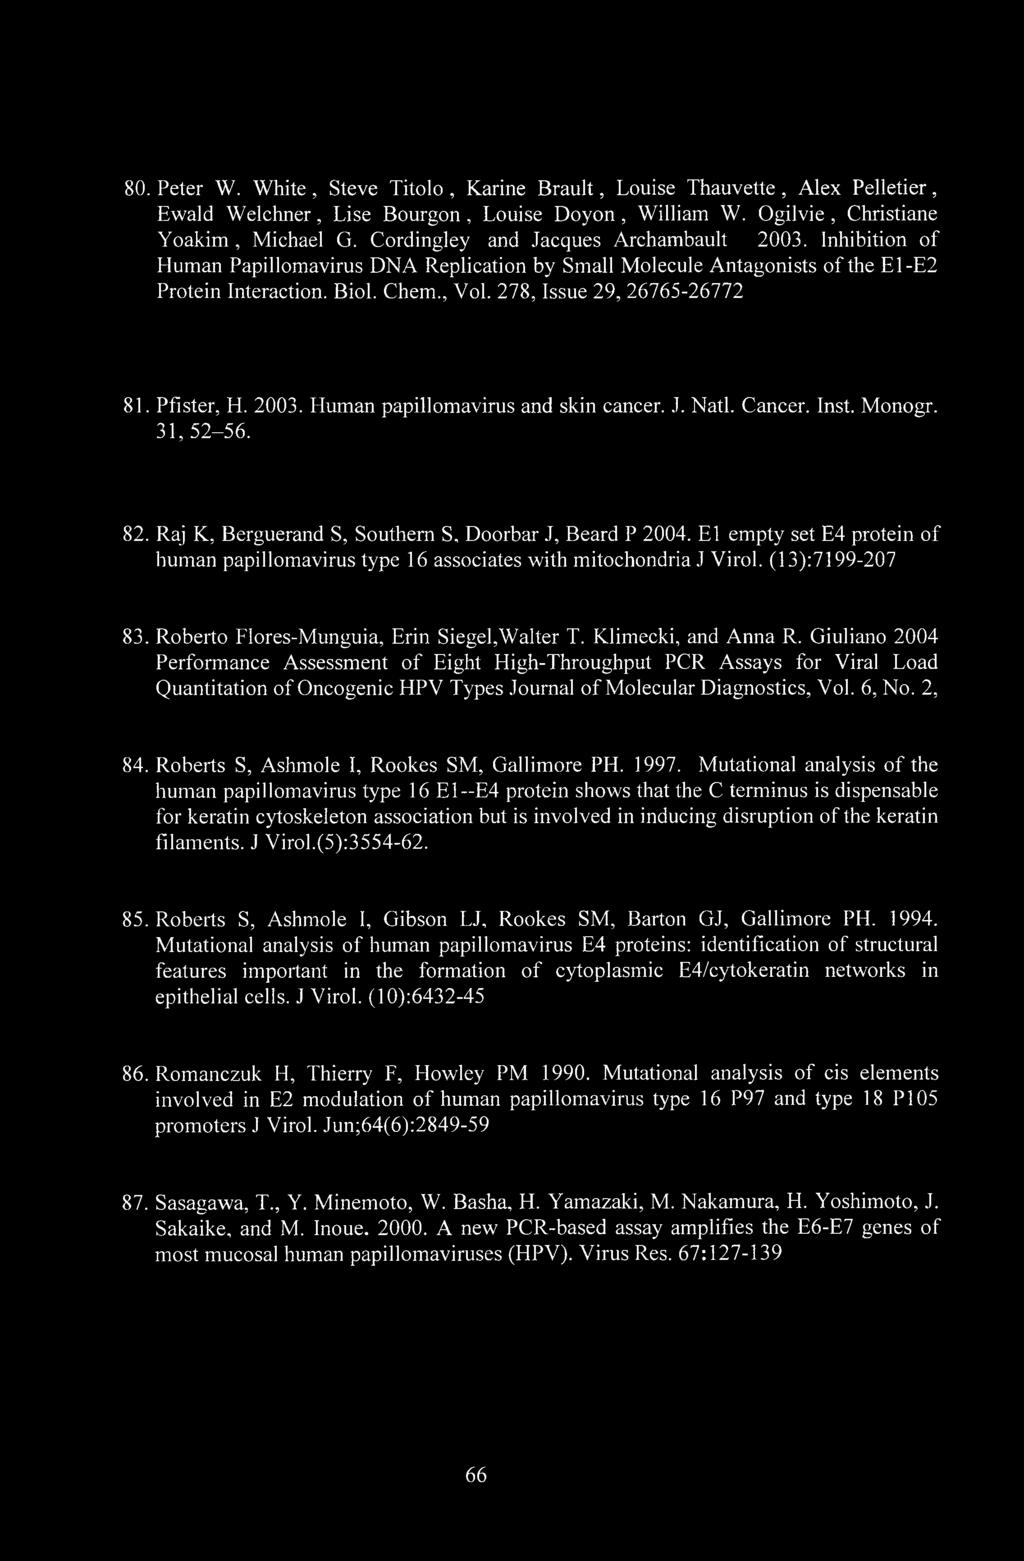 278, Issue 29, 26765-26772 81. Pfister, H. 2003. Human papillomavirus and skin cancer. J. Natl. Cancer. Inst. Monogr. 31,52-56. 82. Raj K, Berguerand S, Southern S, Doorbar J, Beard P 2004.